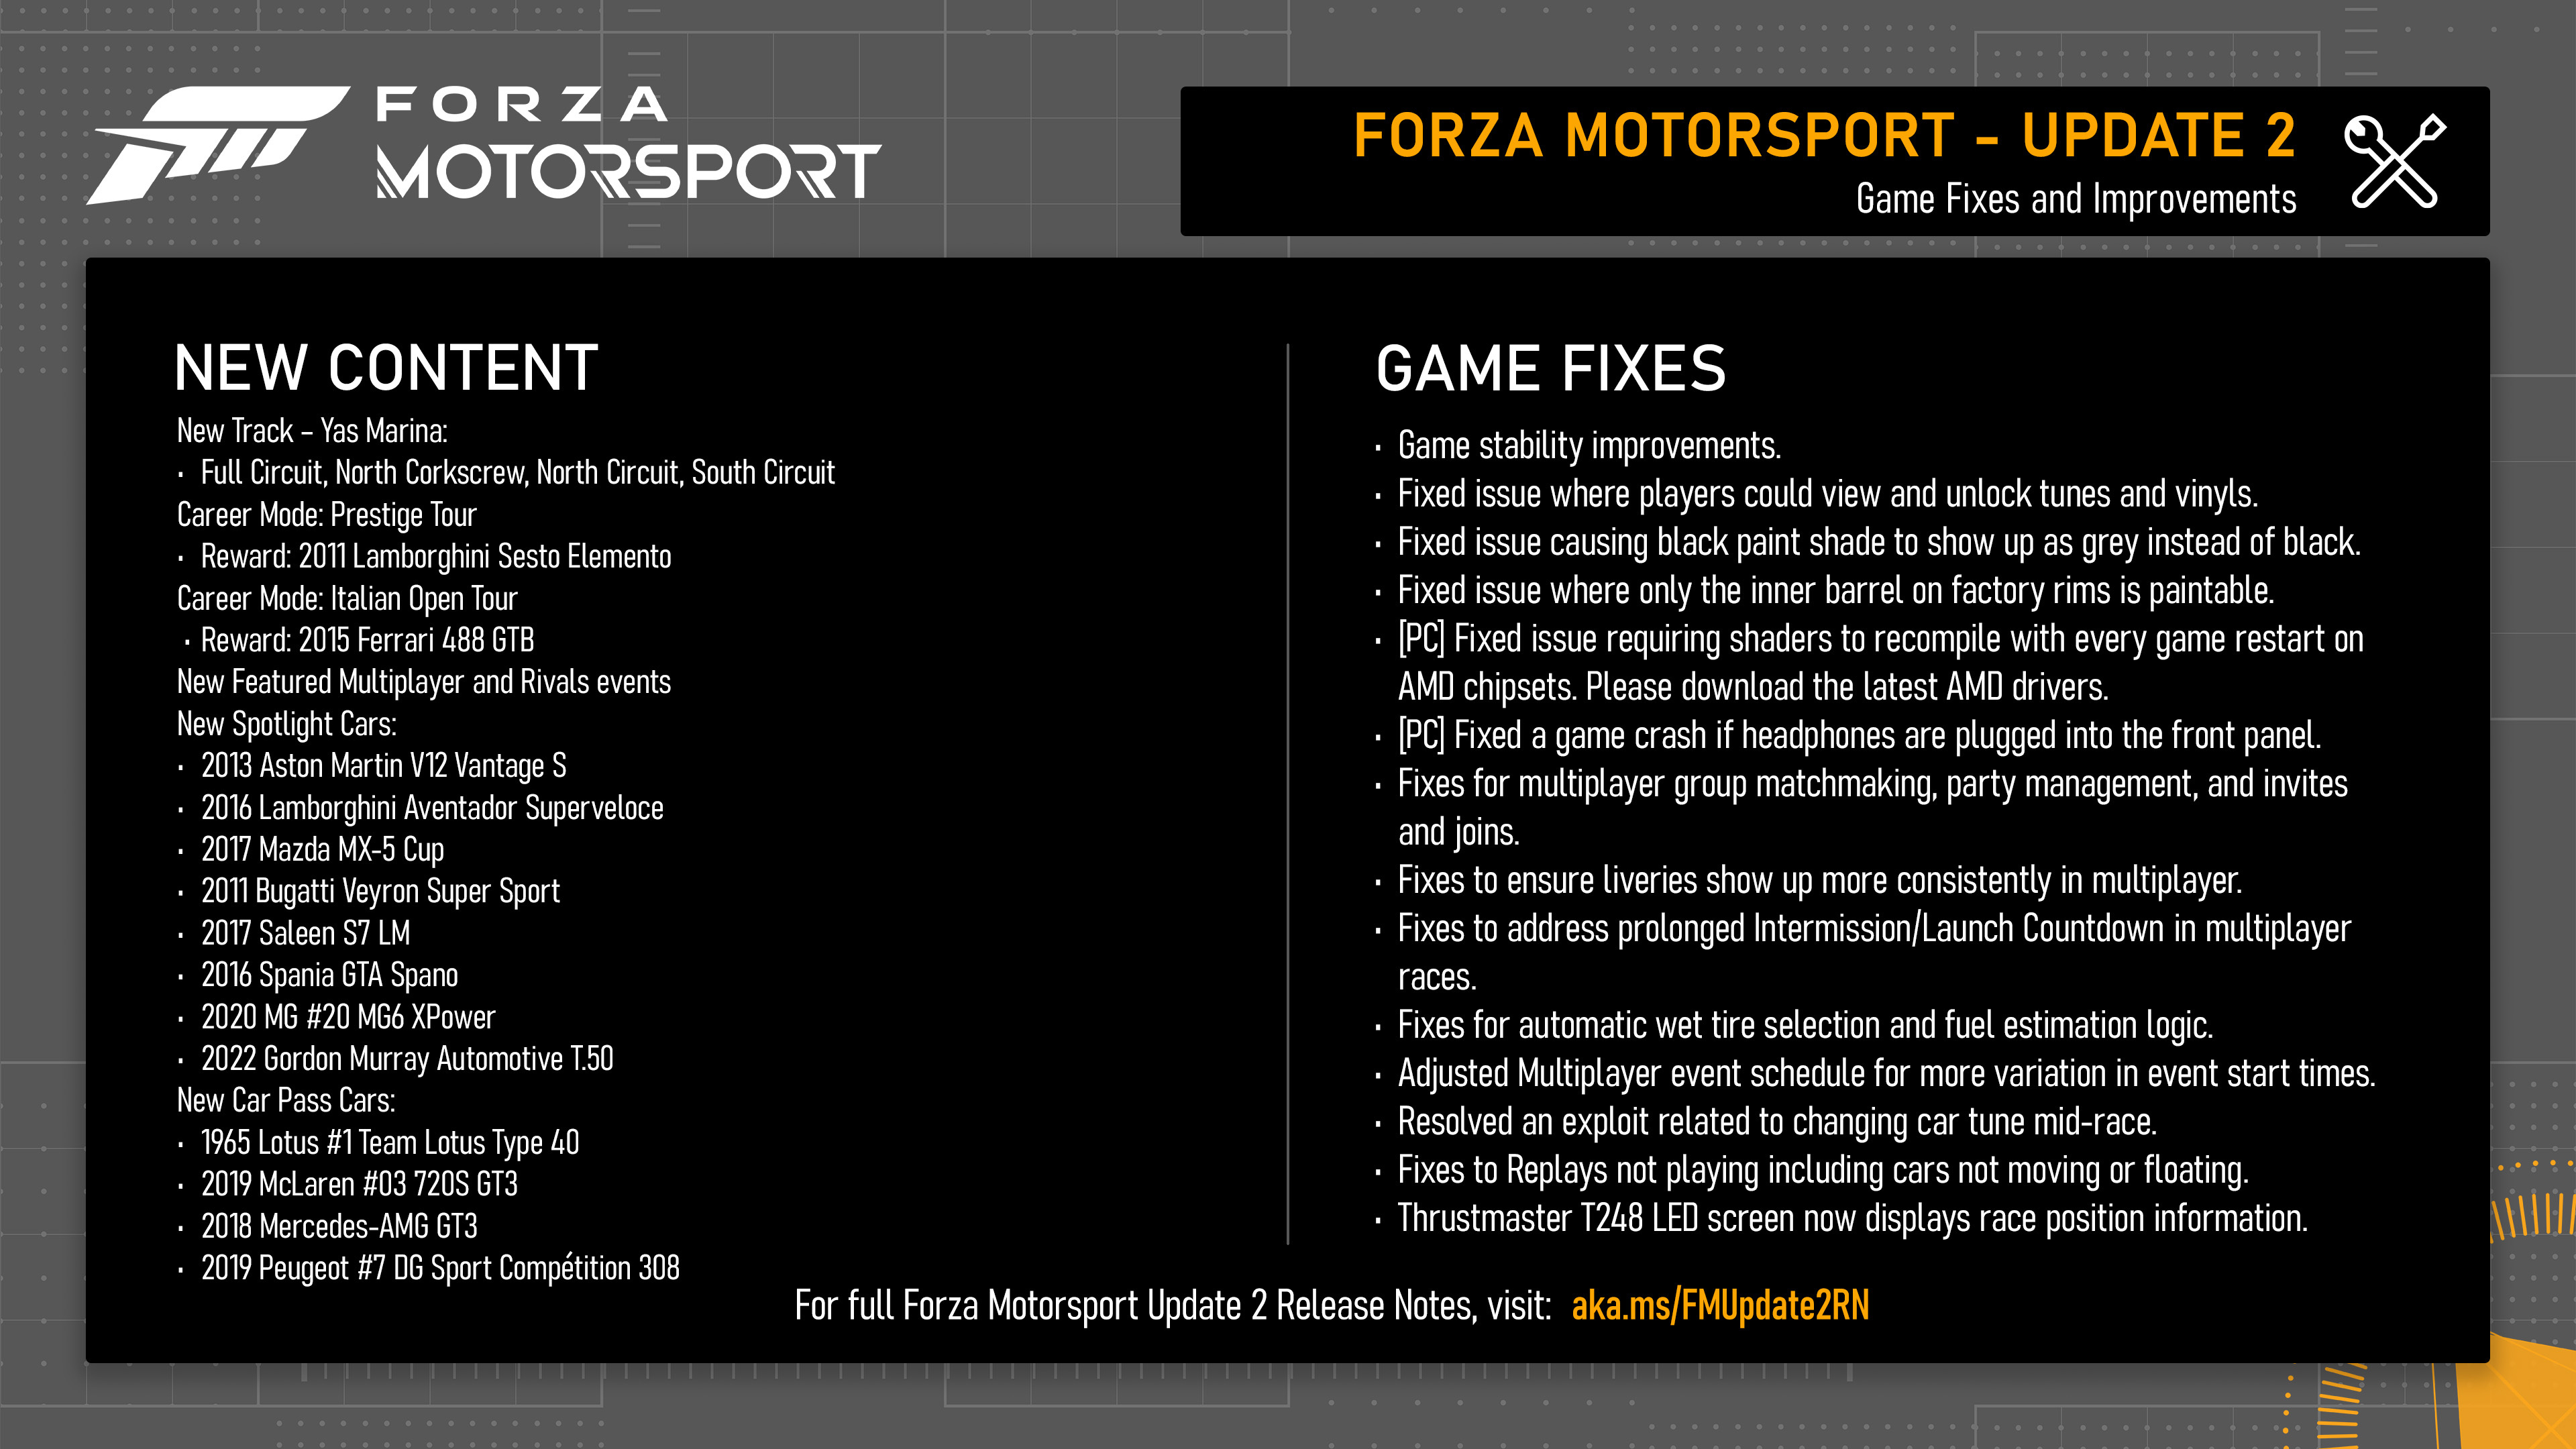 Buy Forza Horizon 4 Deluxe Edition - Microsoft Store ha-Latn-NG